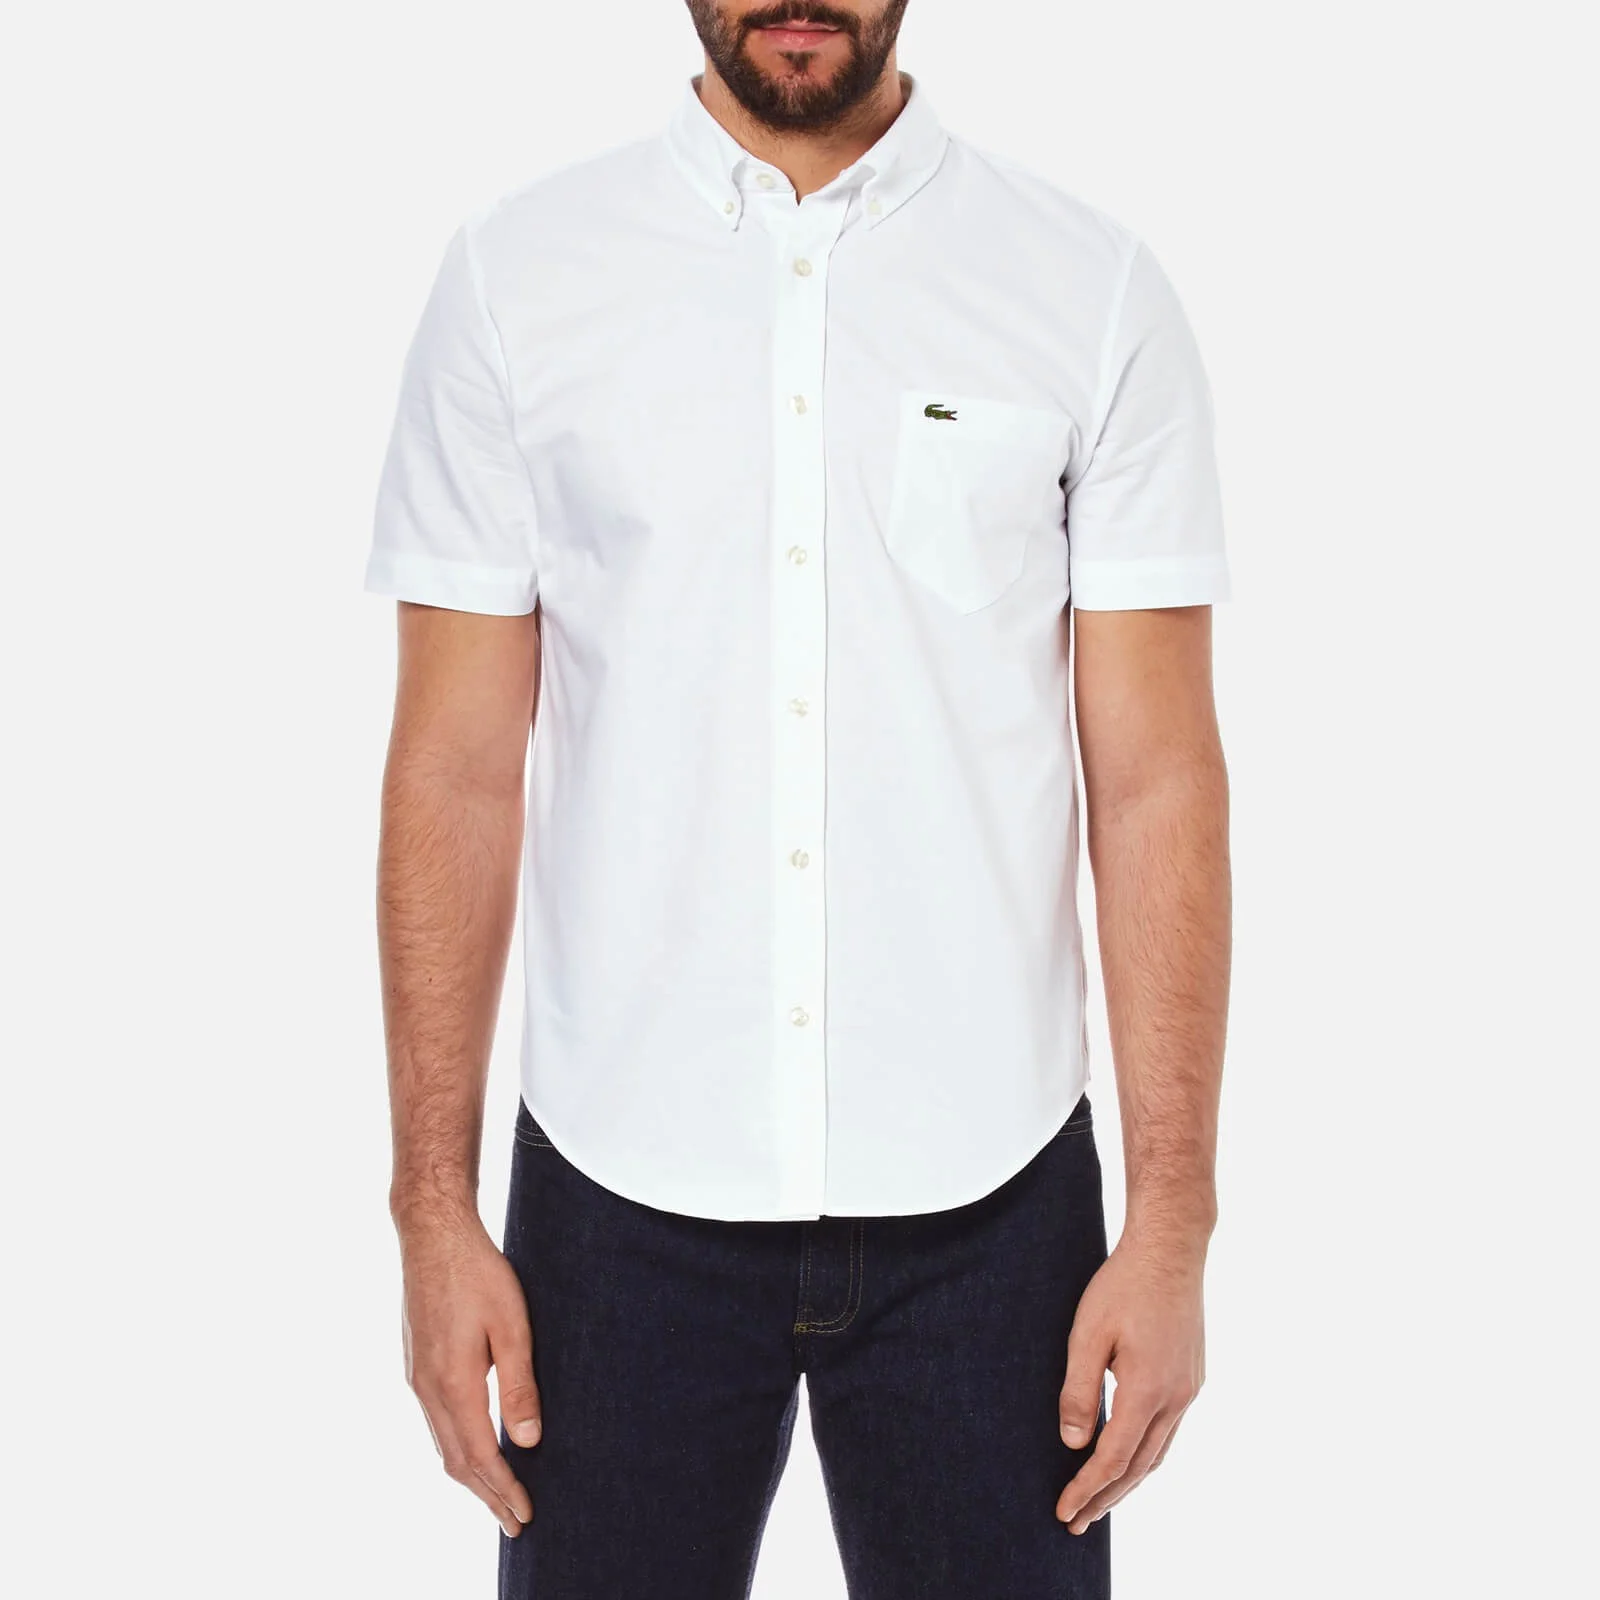 Lacoste Men's Short Sleeve Casual Shirt - White Image 1